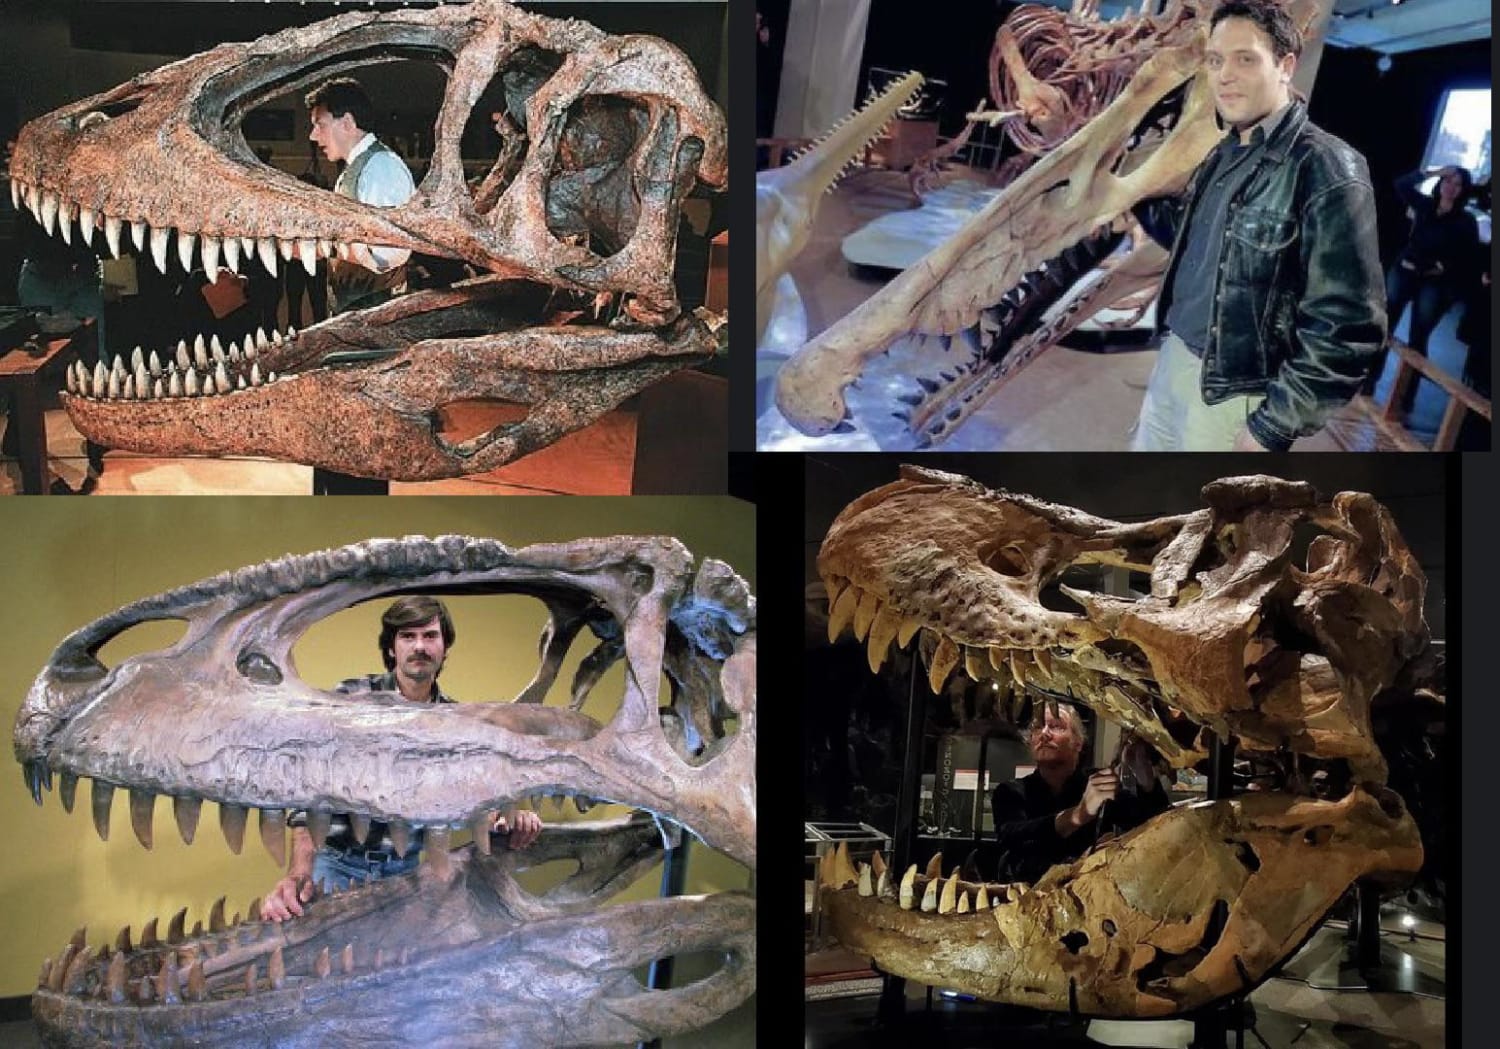 Monsters existed: Top left Carcharodontosaurus, top right: Spinosaurus, bottom left: Giganotosaurus, bottom right: Tyrannosaurus rex.